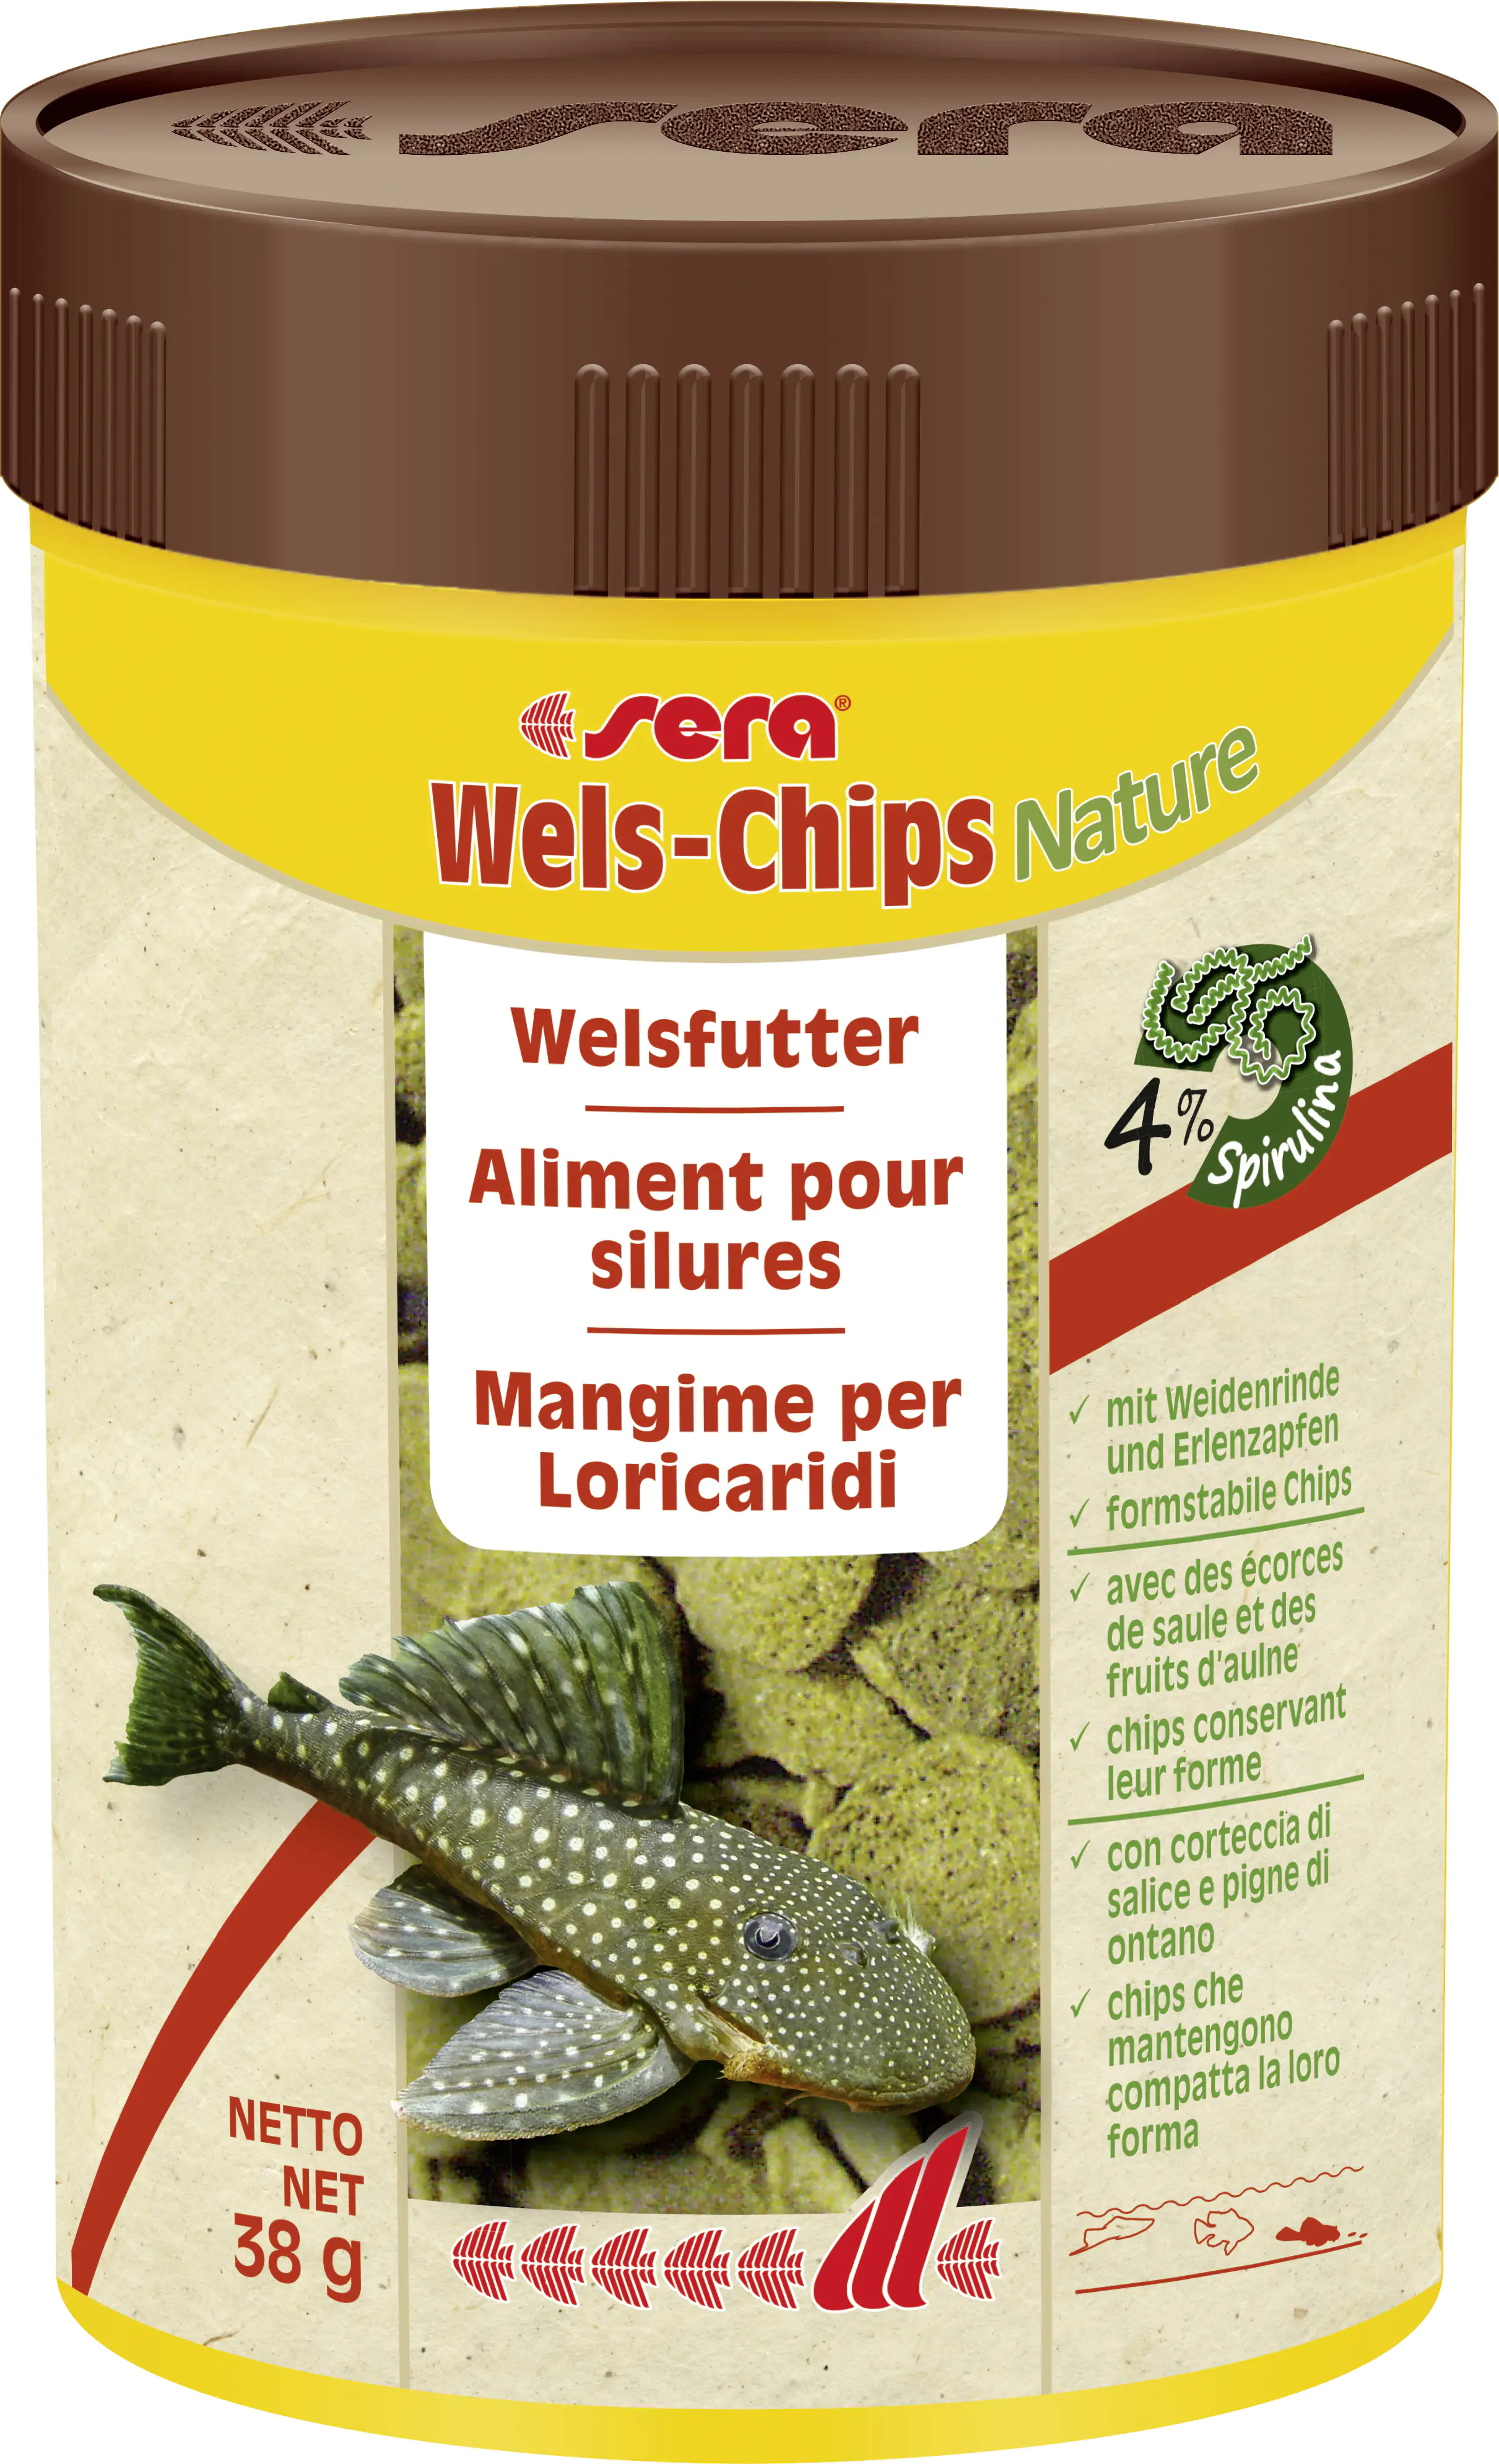 Wels-Chips in Bochum - Bochum-Mitte